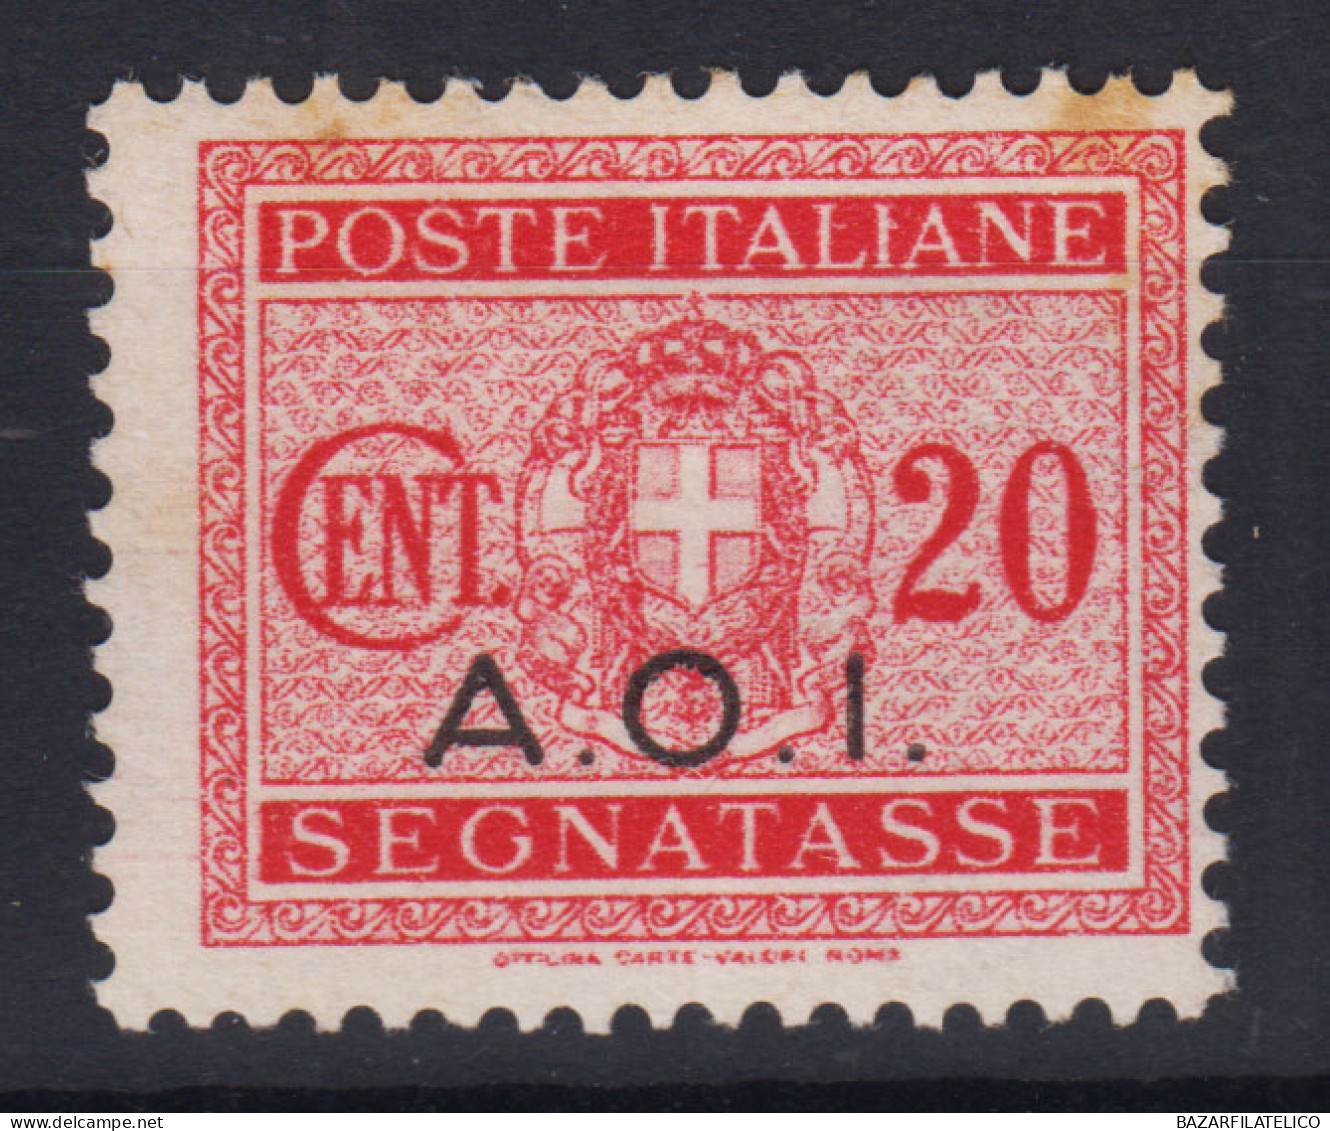 COLONIE AFRICA ORIENTALE ITALIANA 1939-40 SEGNATASSE 20 CENTESIMI N.3 G.O MH* - Italian Eastern Africa